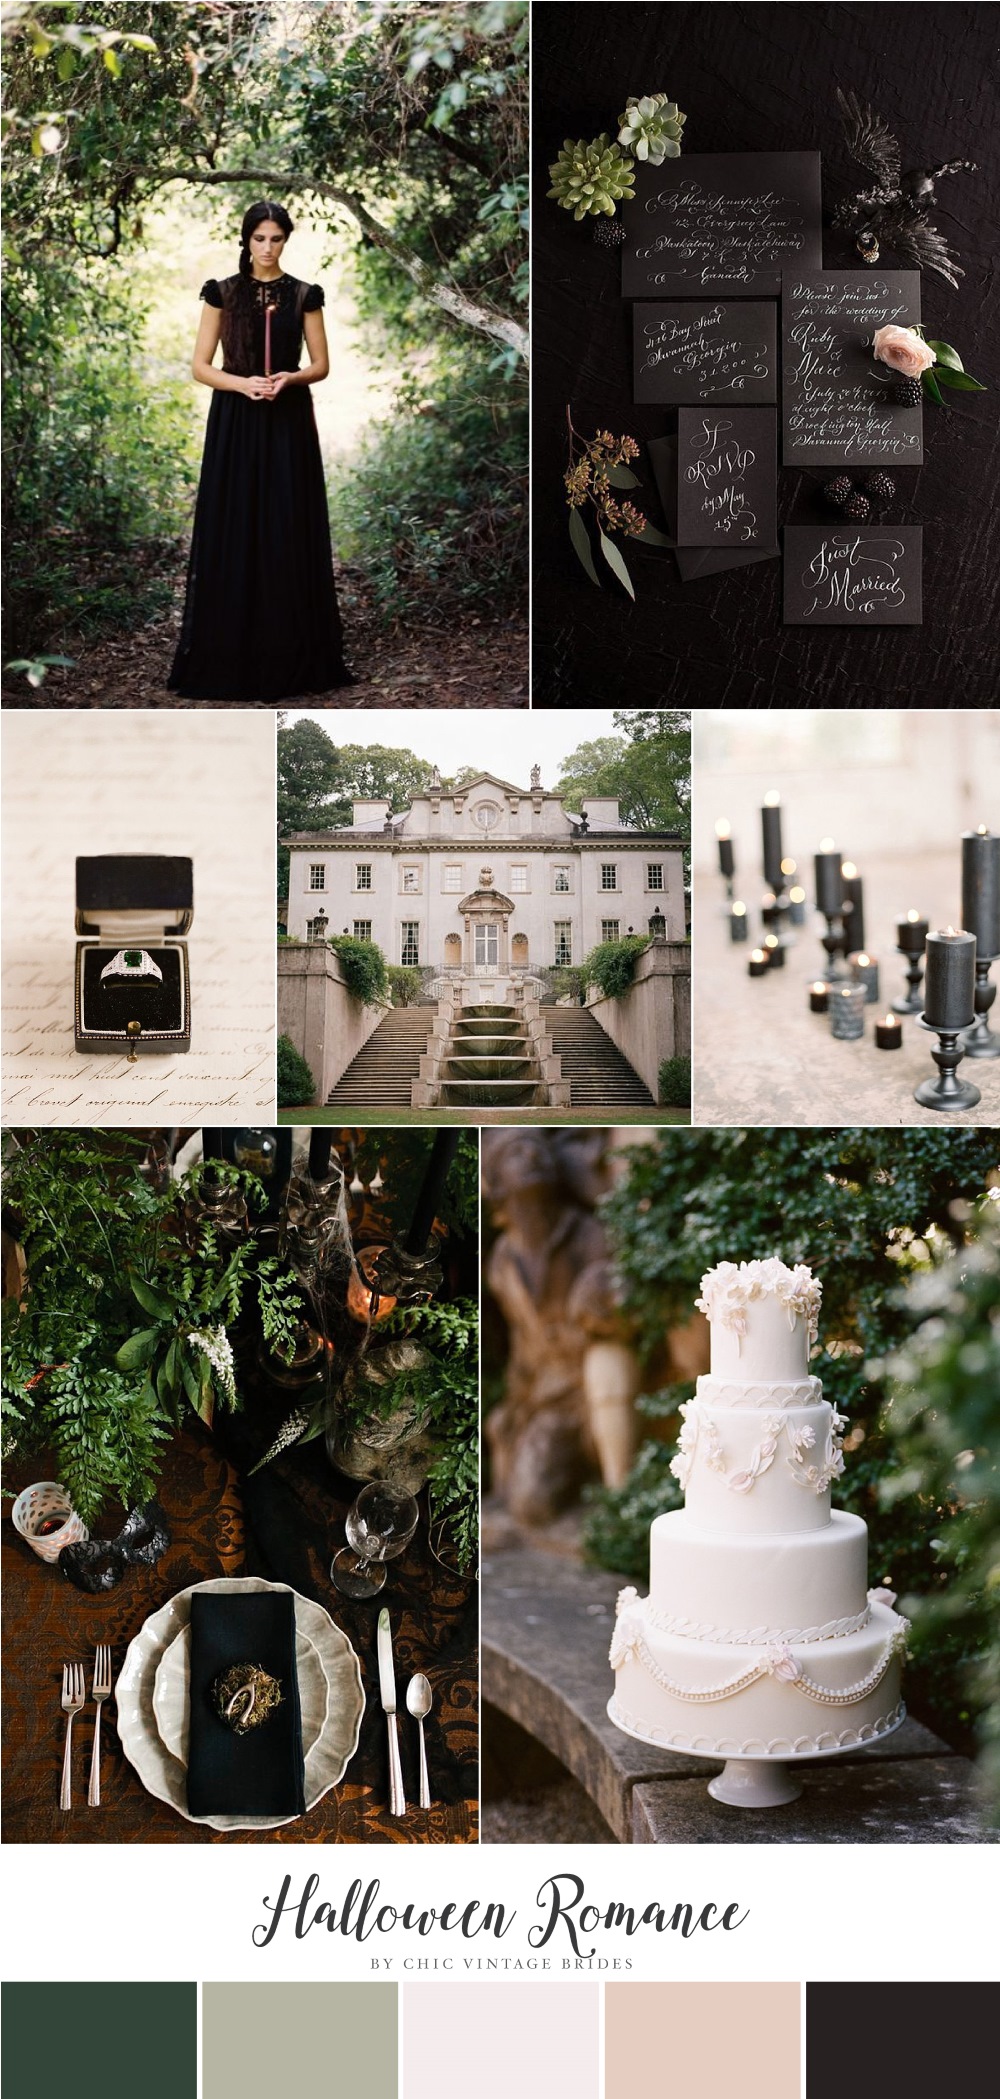 Halloween Romance - Wedding Inspiration in Black, Green & Neutrals